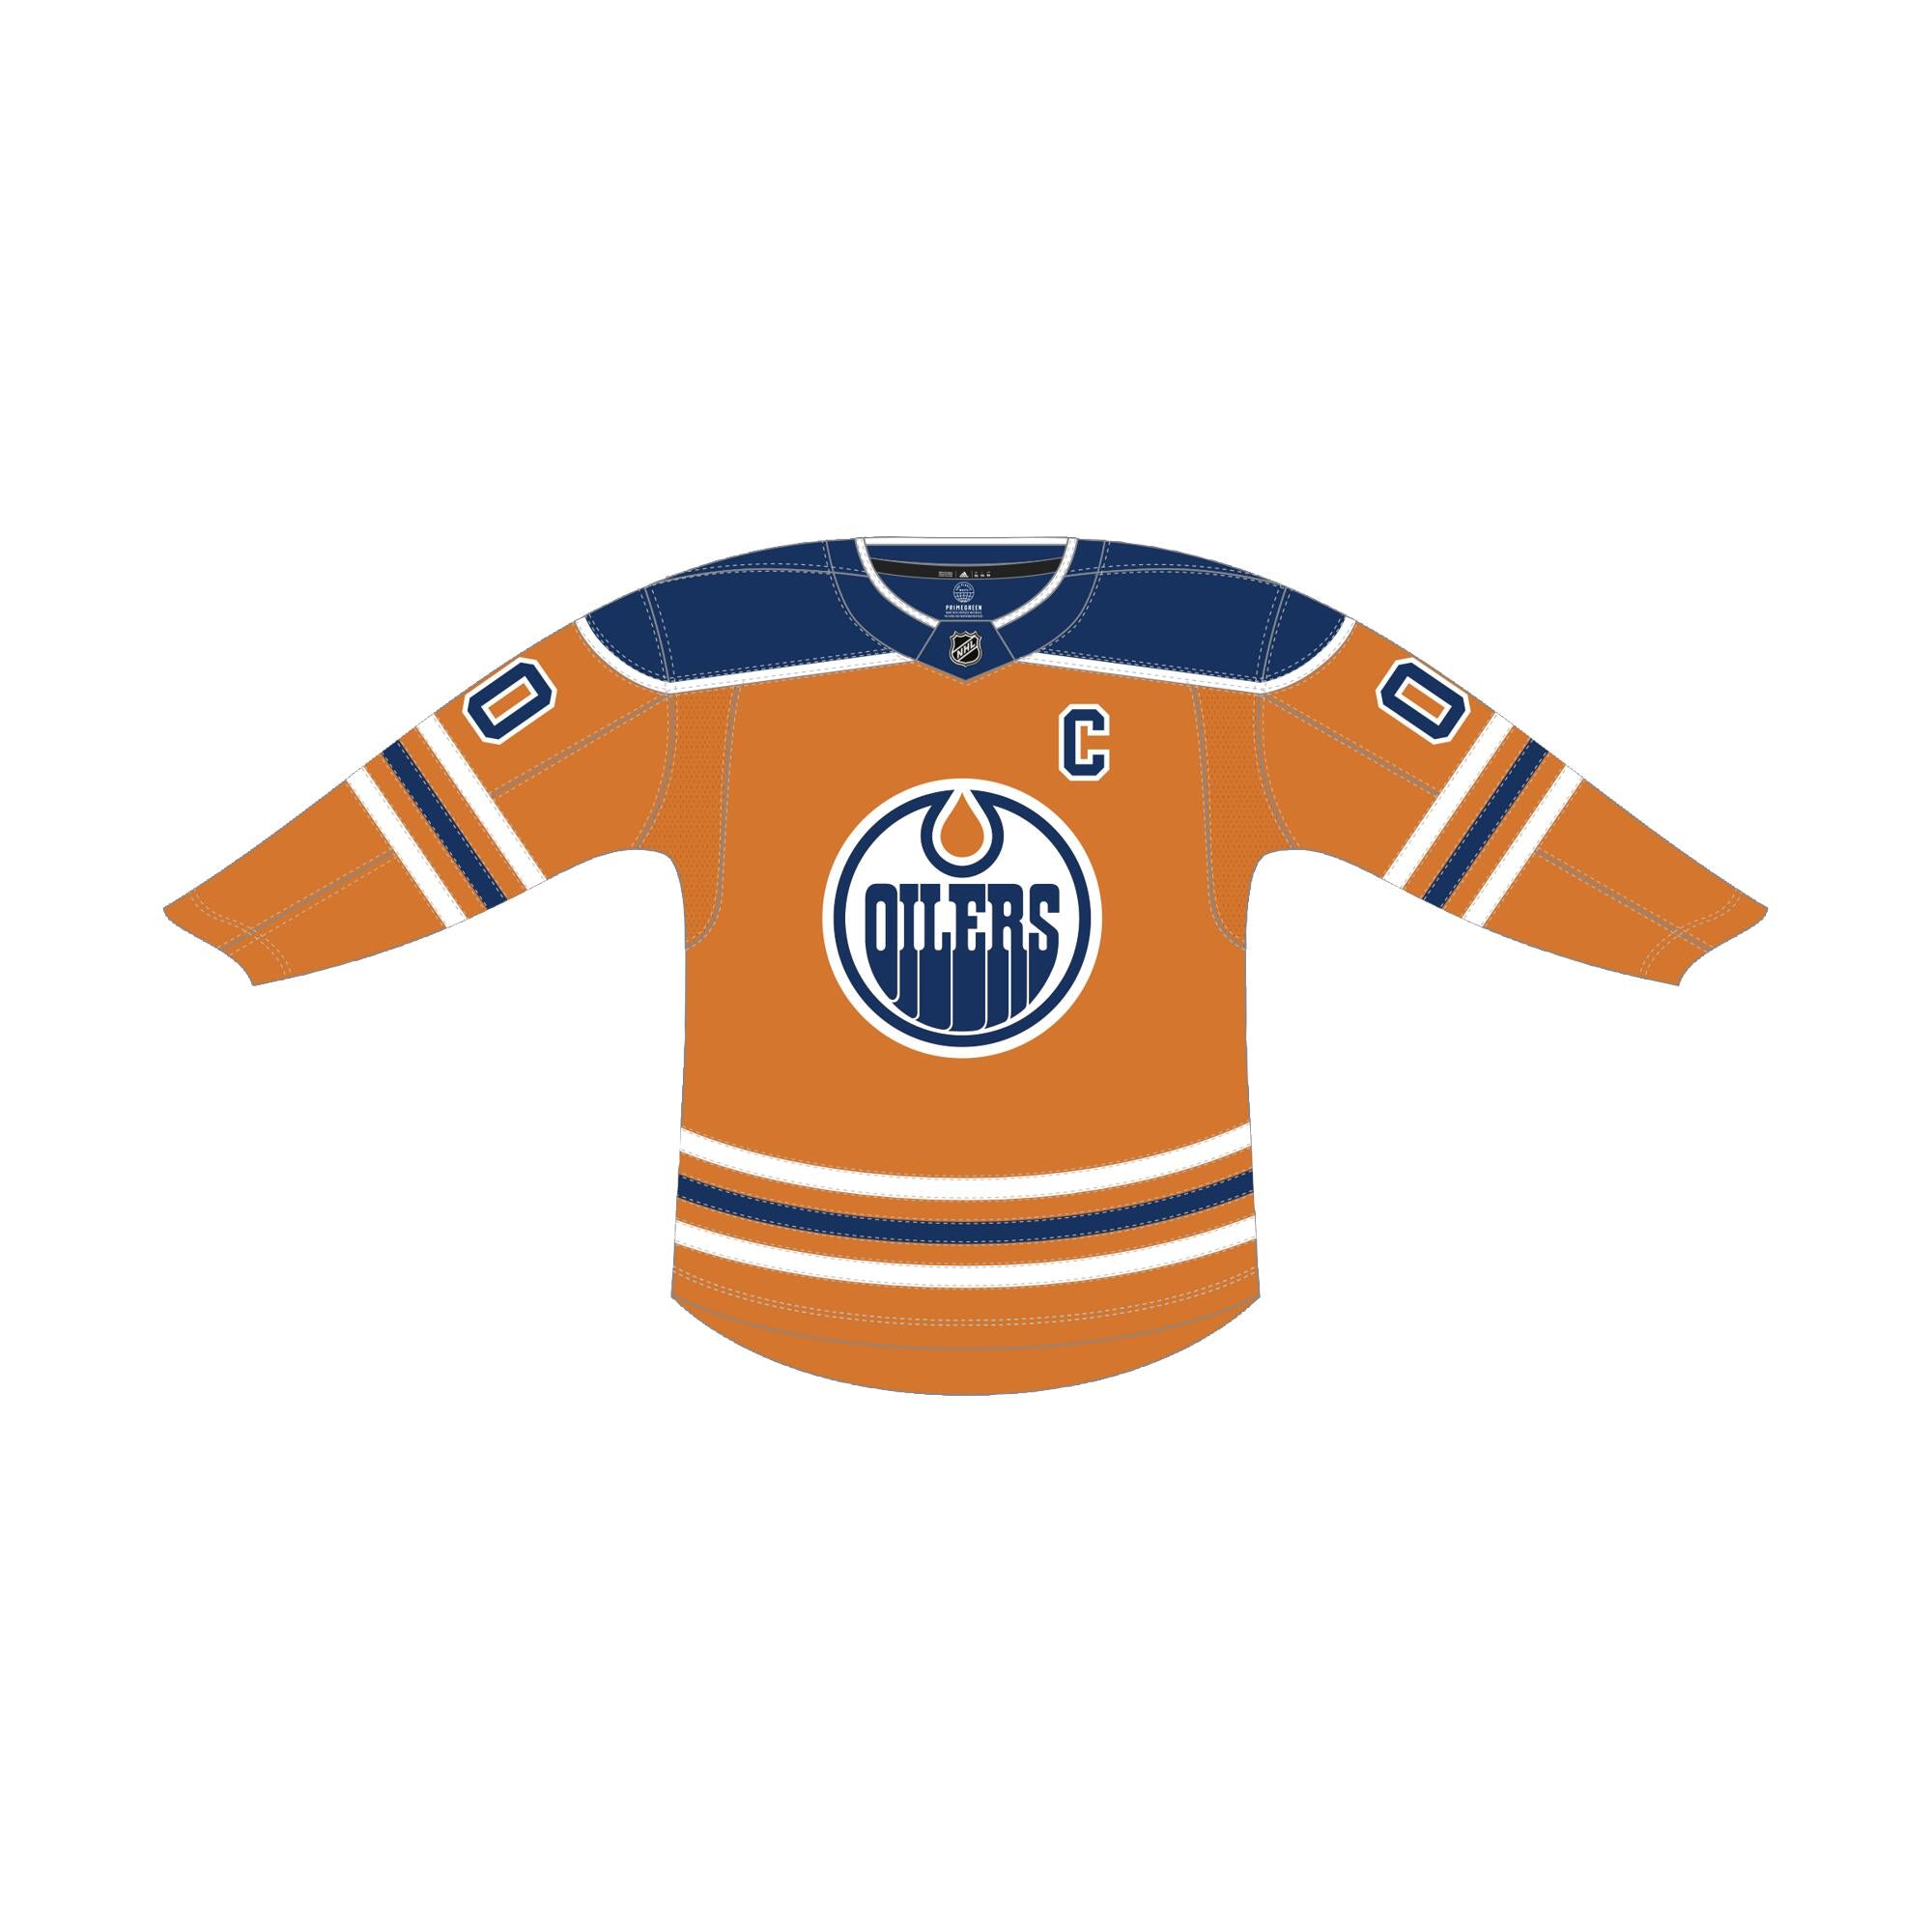 Men's Edmonton Oilers Connor McDavid adidas Orange Home Authentic